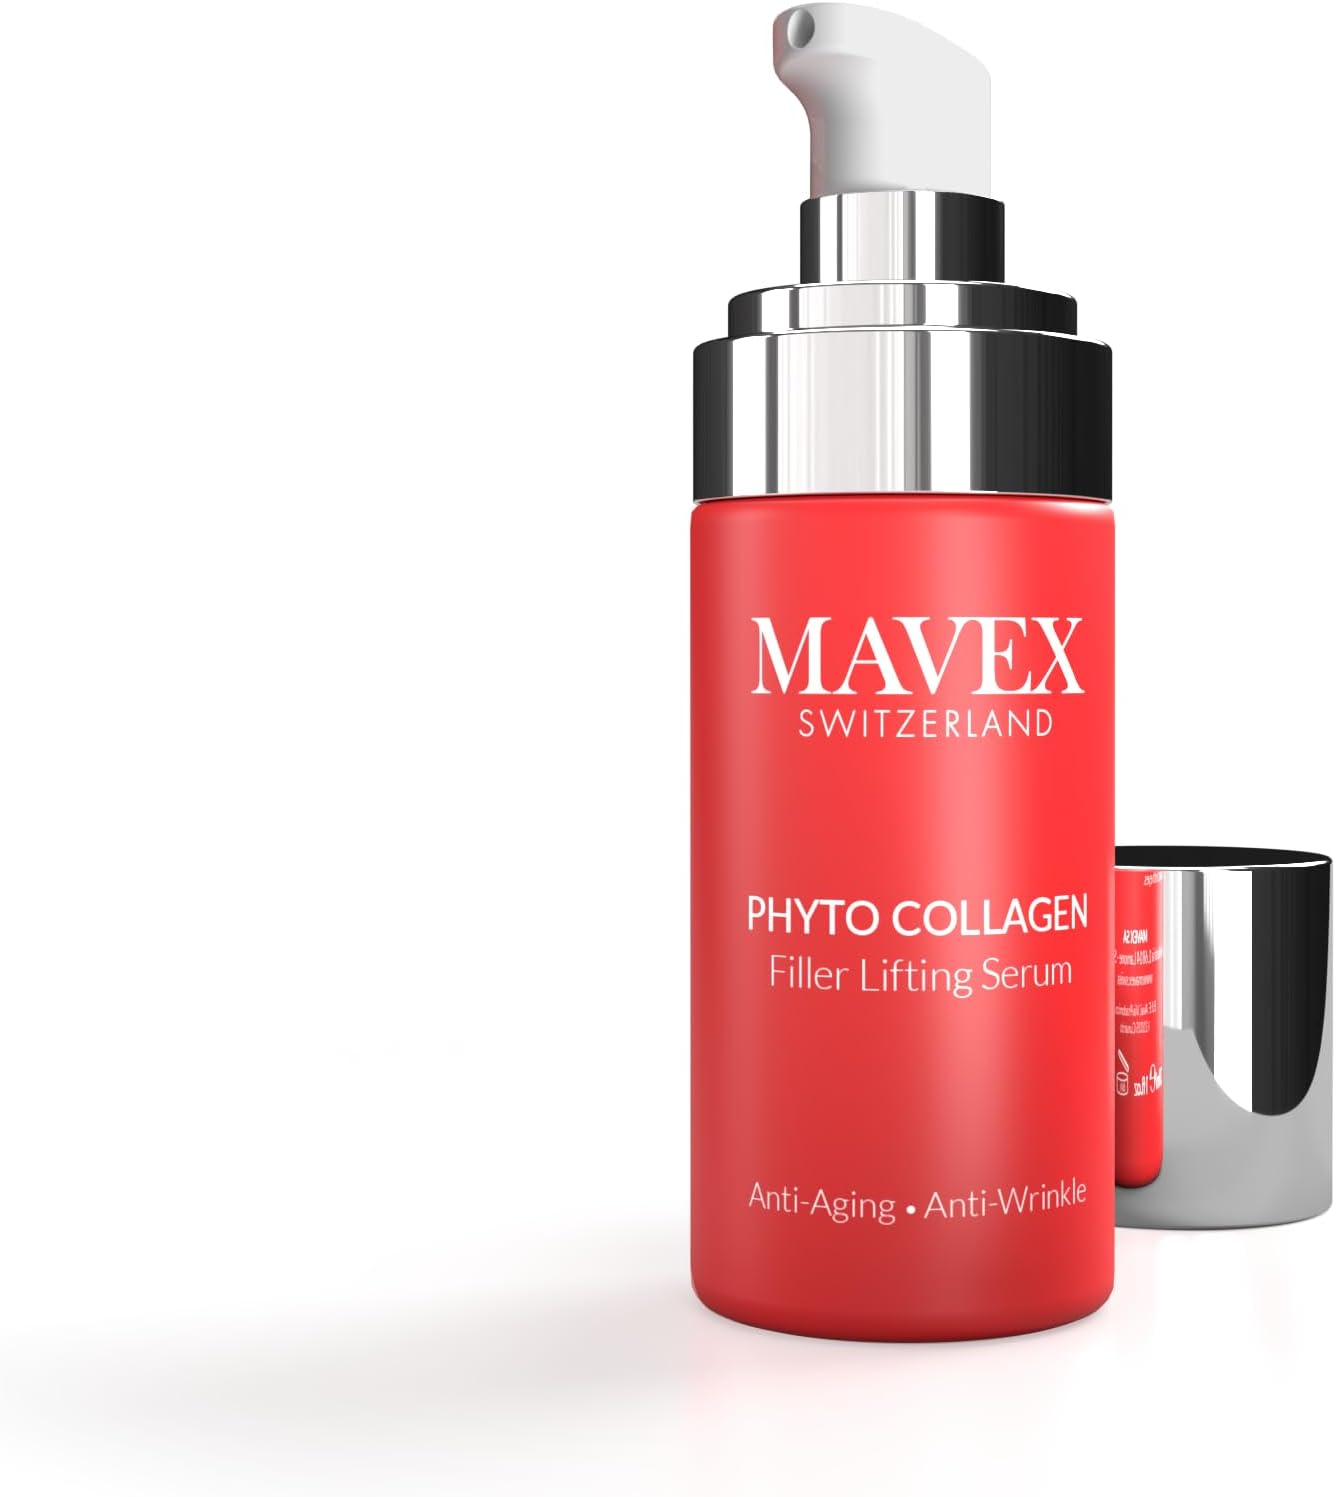 MAVEX PHITO COLLAGEN Filler Lifting Serum 30ml Anti-aging